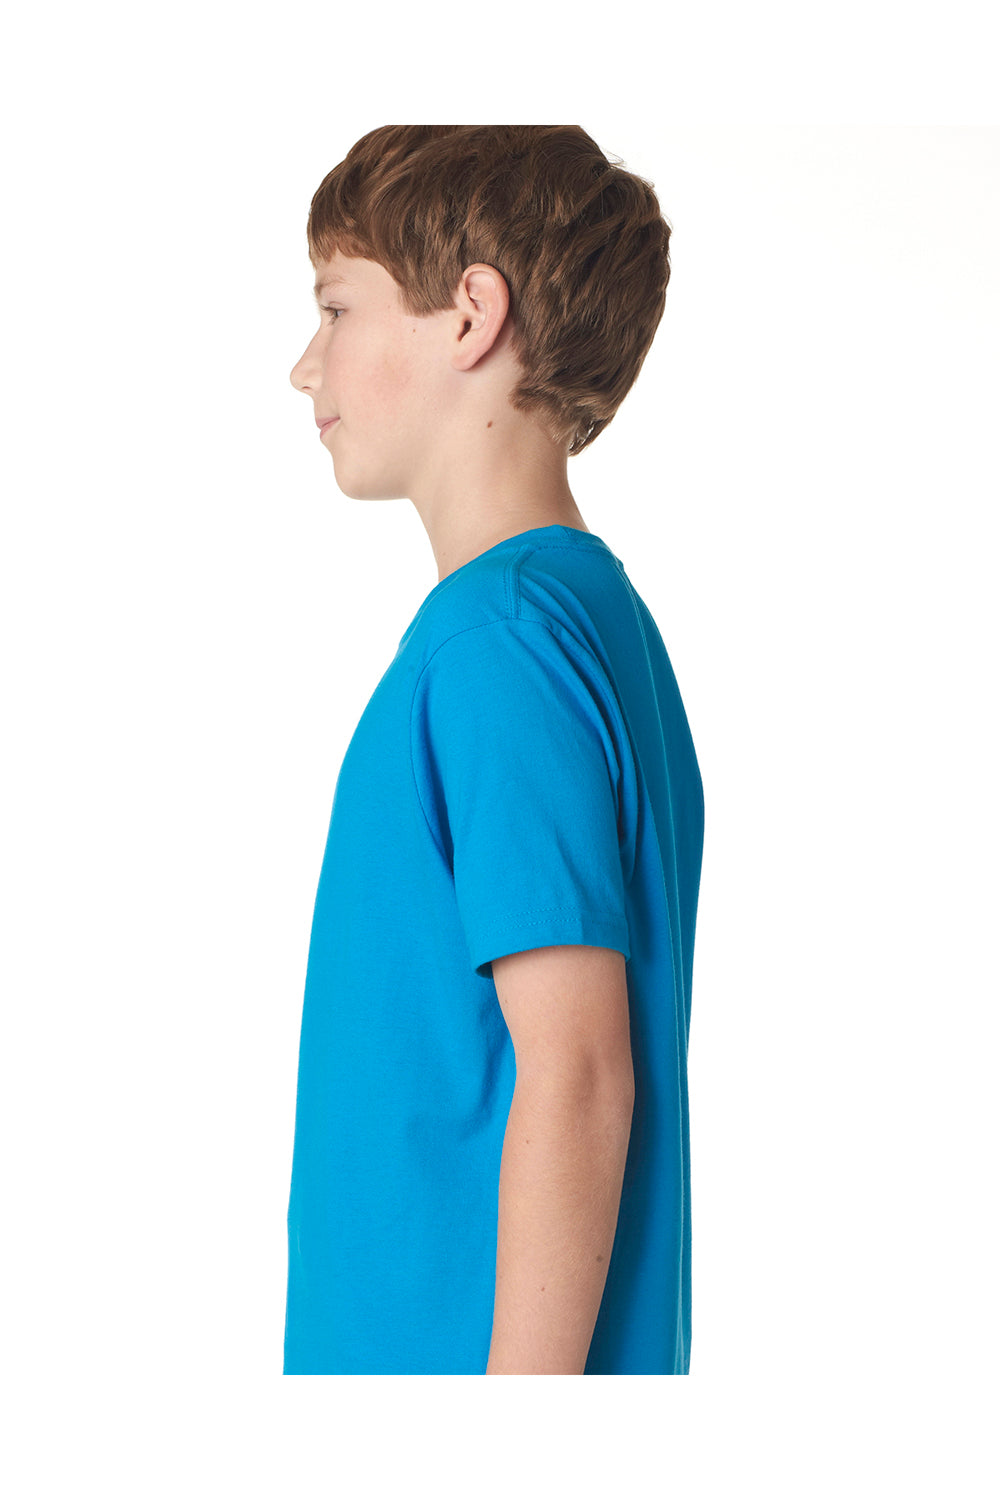 Next Level 3310 Youth Fine Jersey Short Sleeve Crewneck T-Shirt Turquoise Blue Side